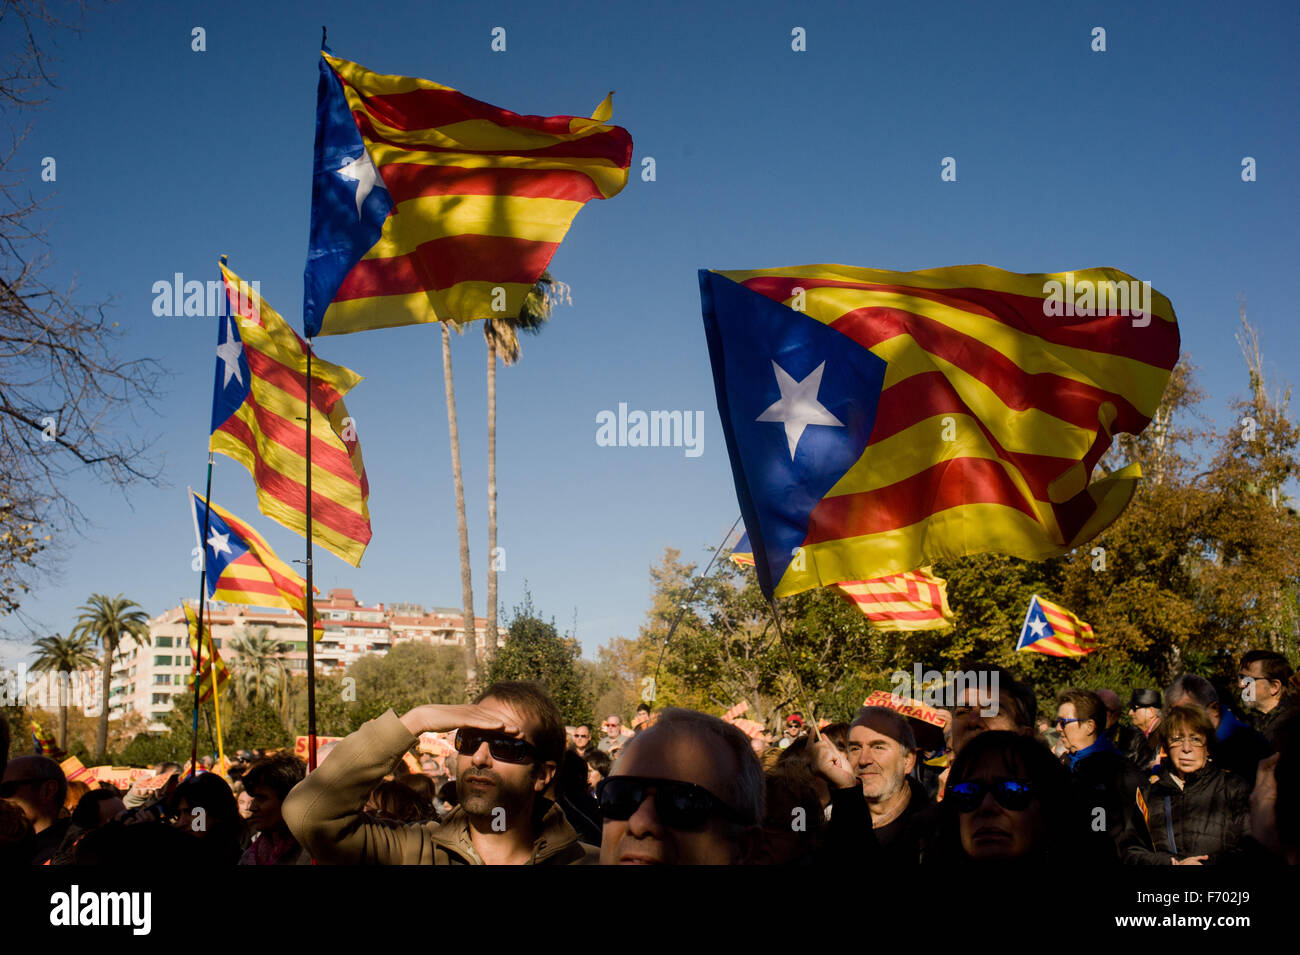 Les gens vague estelada flags (symbole de l'indépendance catalane) au Parc de la Ciutadella de Barcelone. Banque D'Images